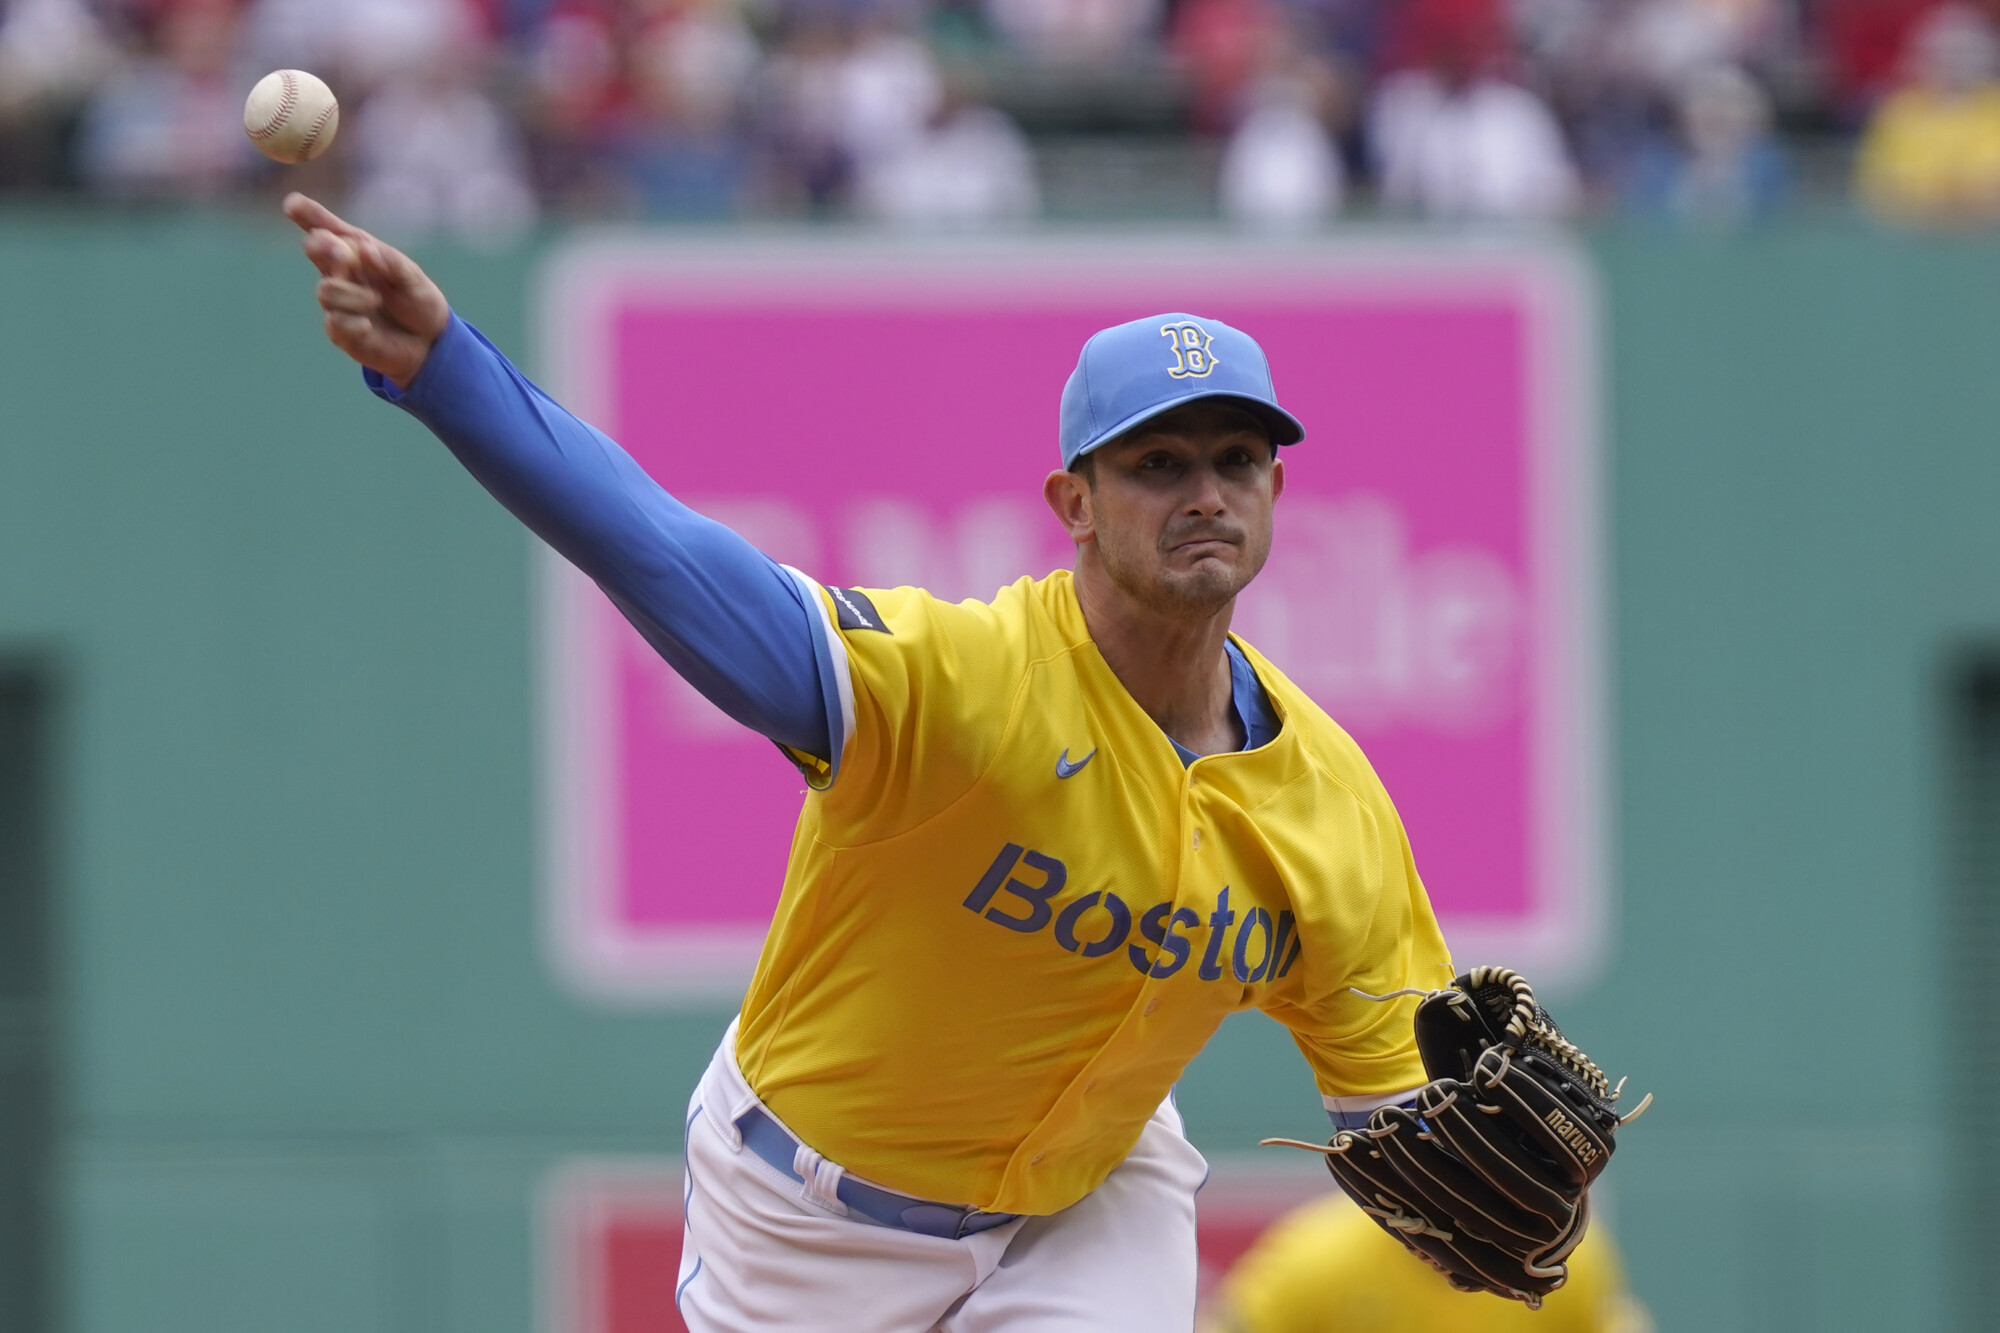 Should Red Sox wear yellow Boston Marathon jerseys in ALDS Game 4